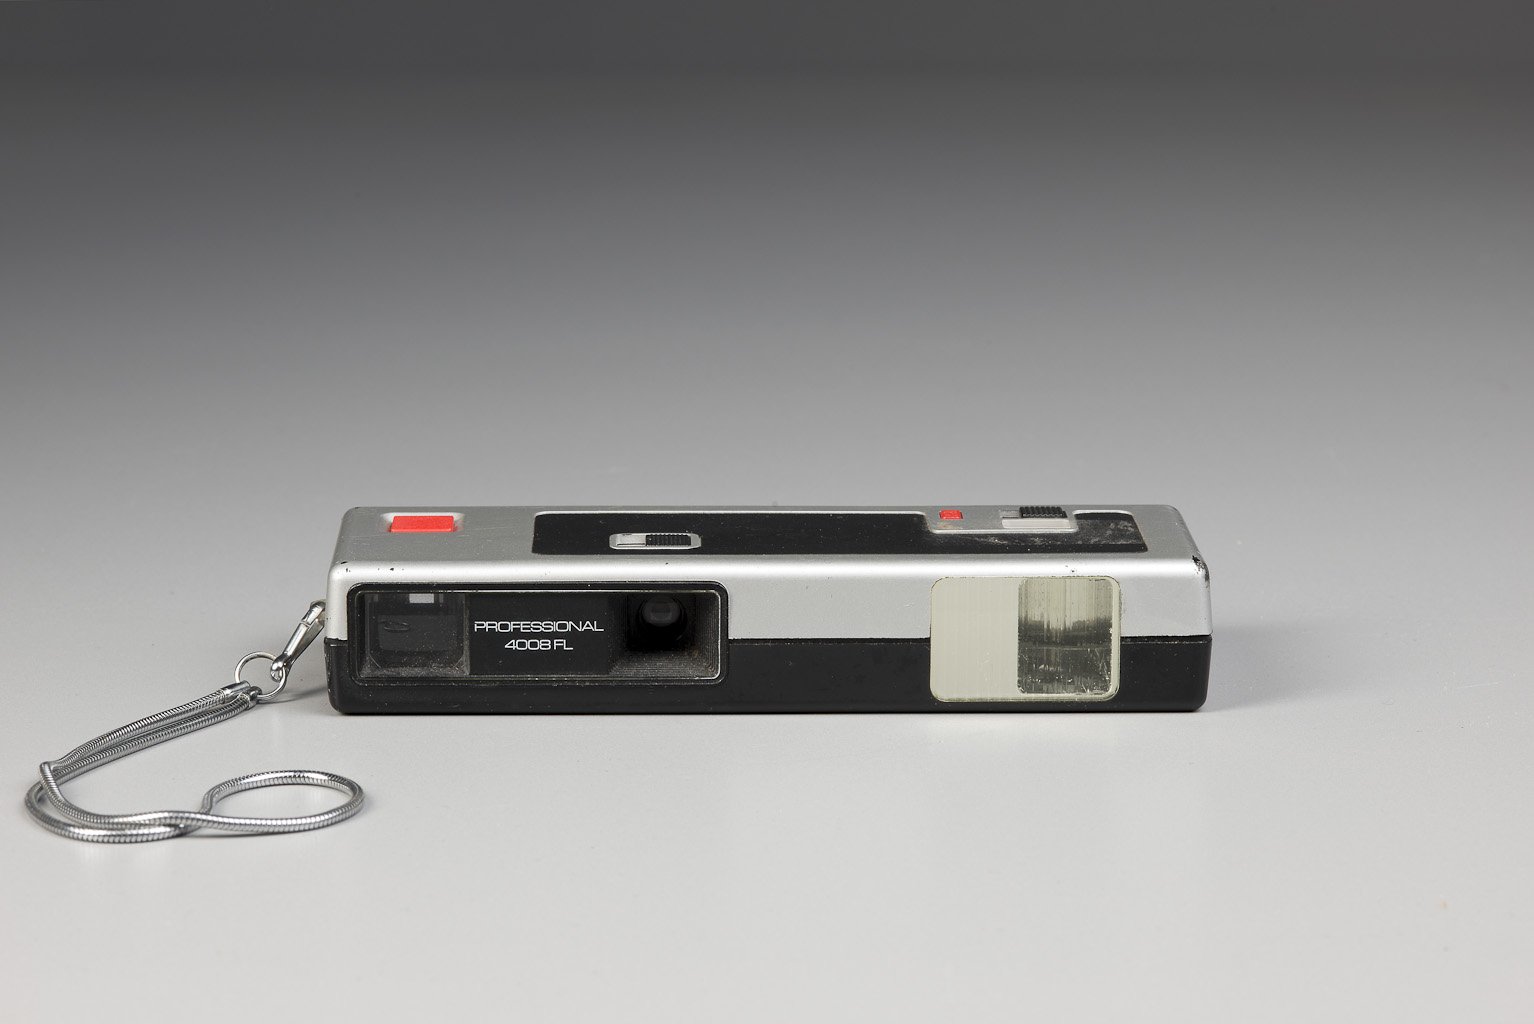 Pocketkamera Agfa Proffessional 4008 FL (Freilichtmuseum Roscheider Hof CC0)